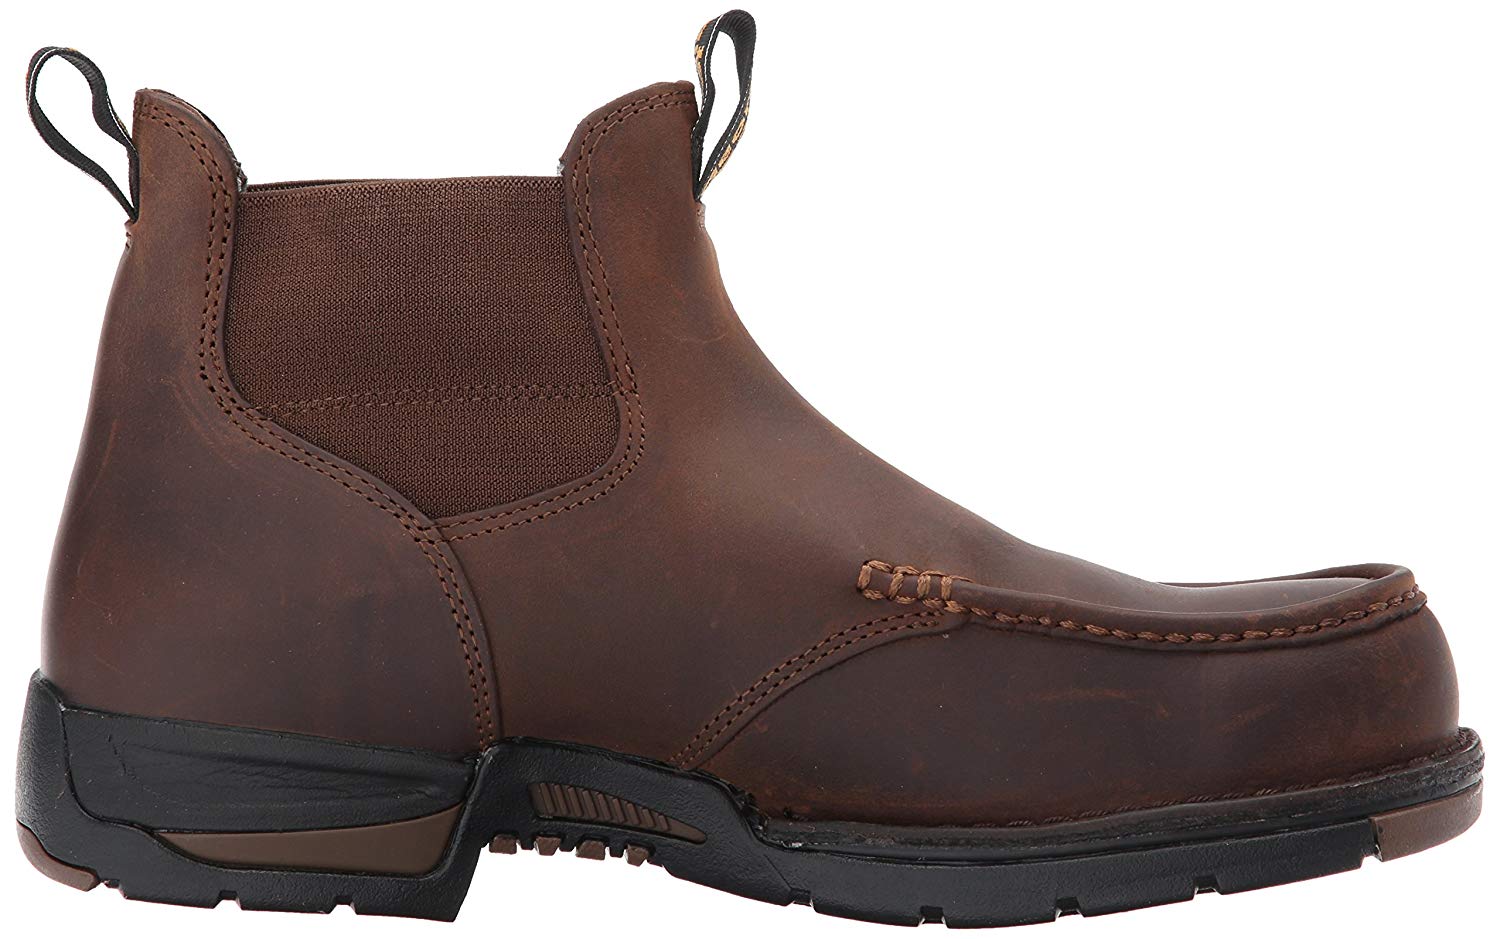 Georgia GB00156 Mid Calf Boot, Dark Brown, Size 10.5 gVUs 718562594768